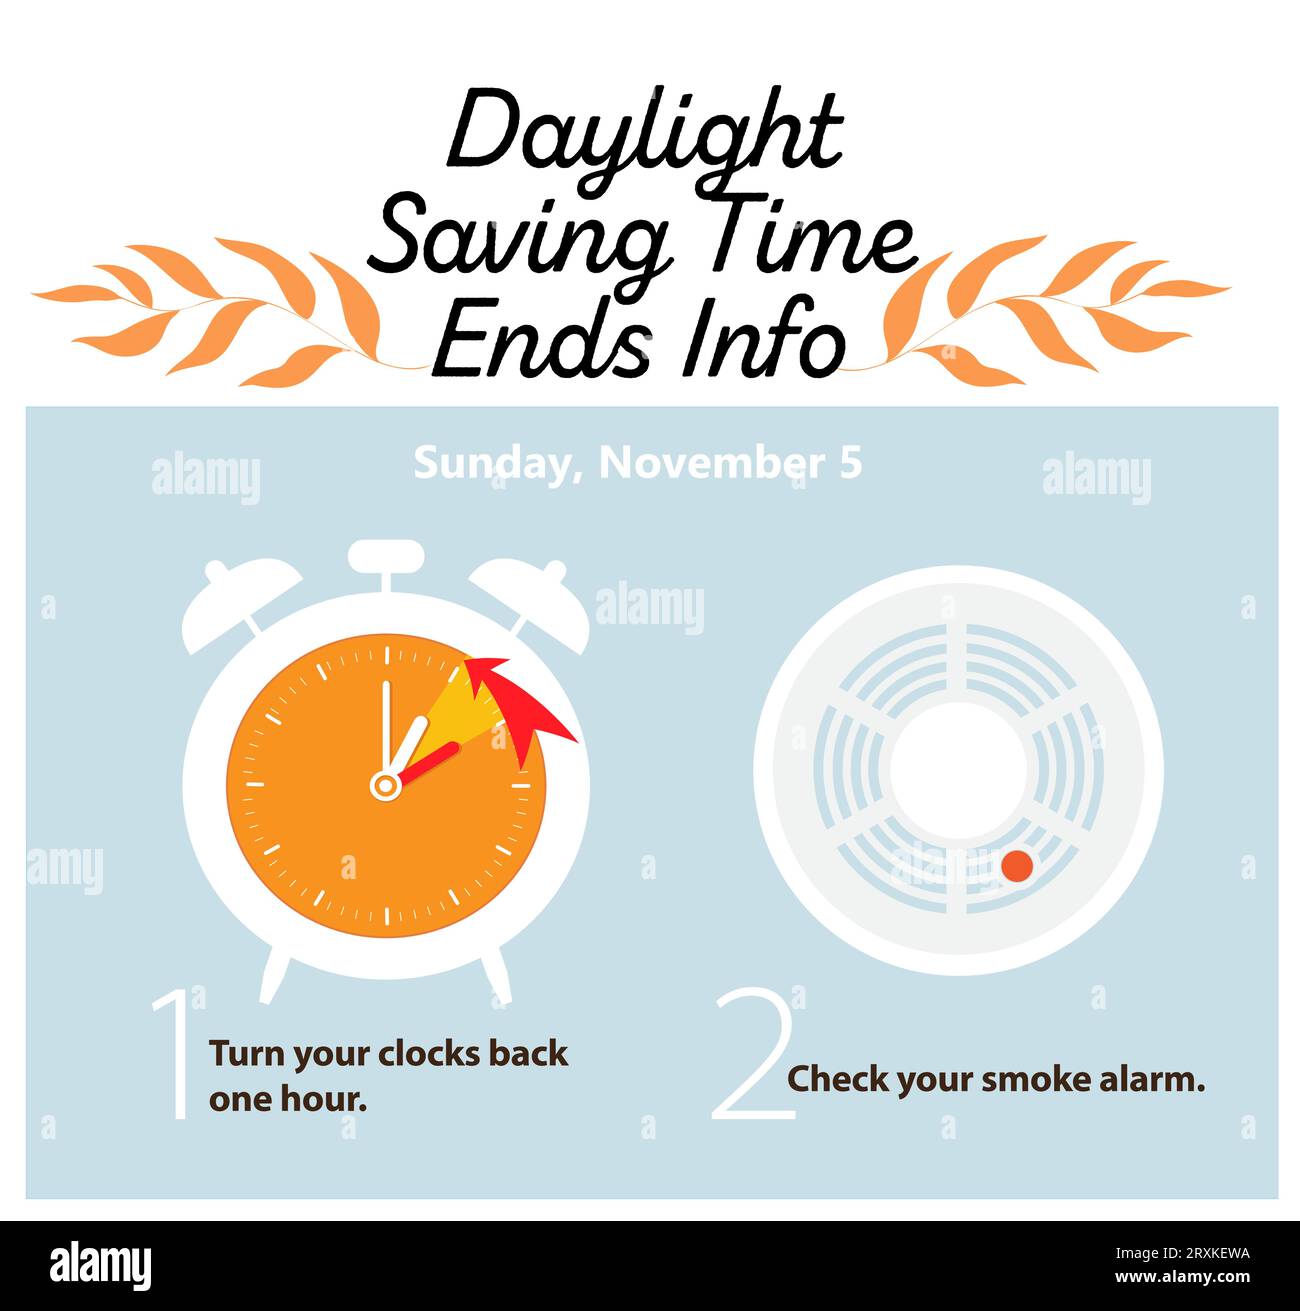 Daylight saving time 2023: When do we fall back?